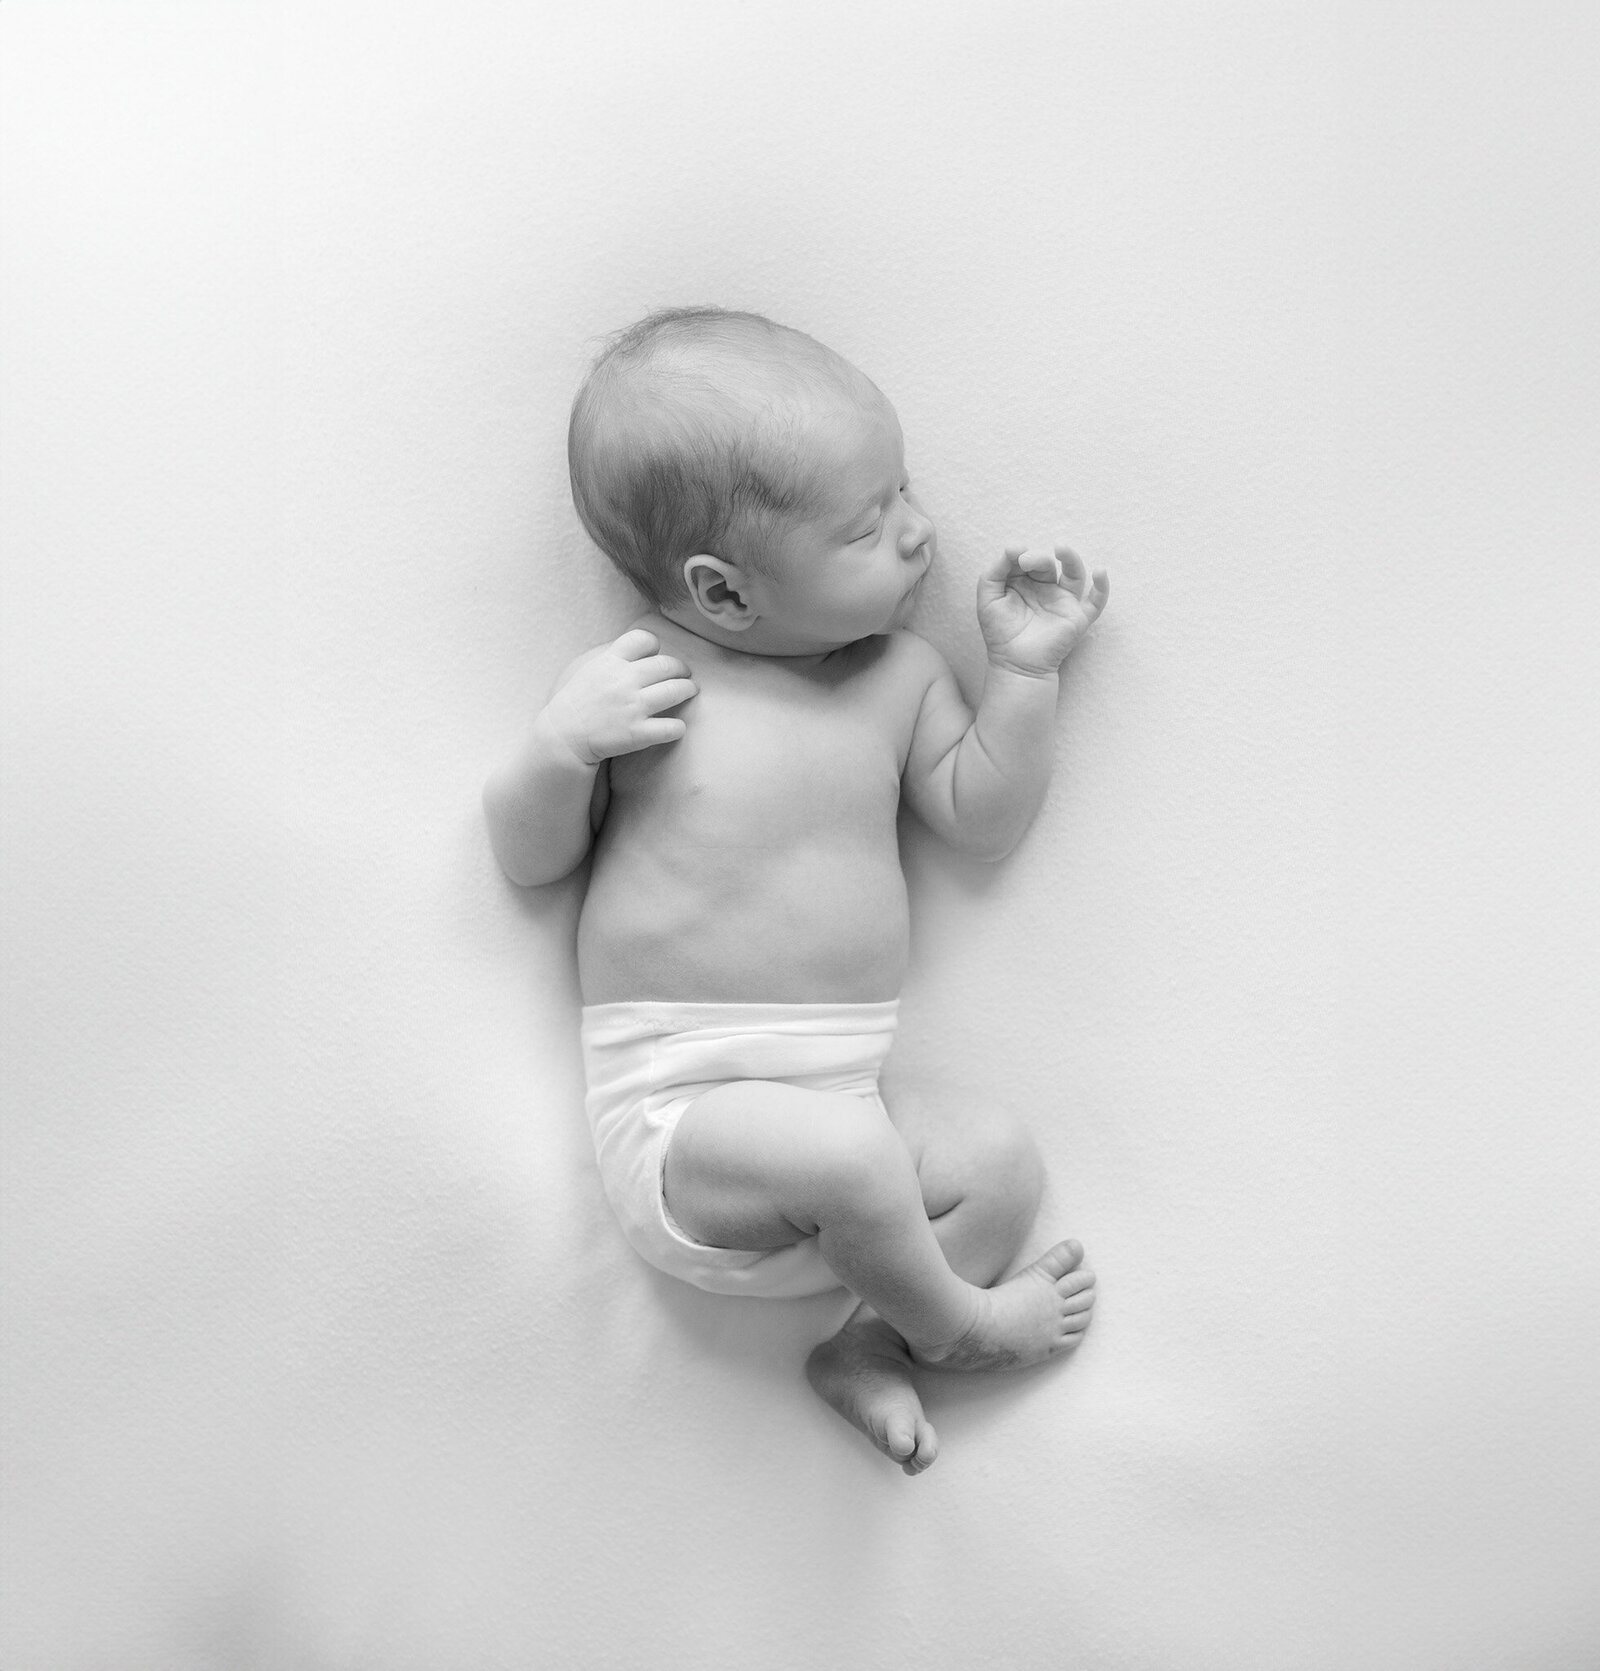 baby wearing simple diaper cover sleeps during massachusetts newborn photoshoot